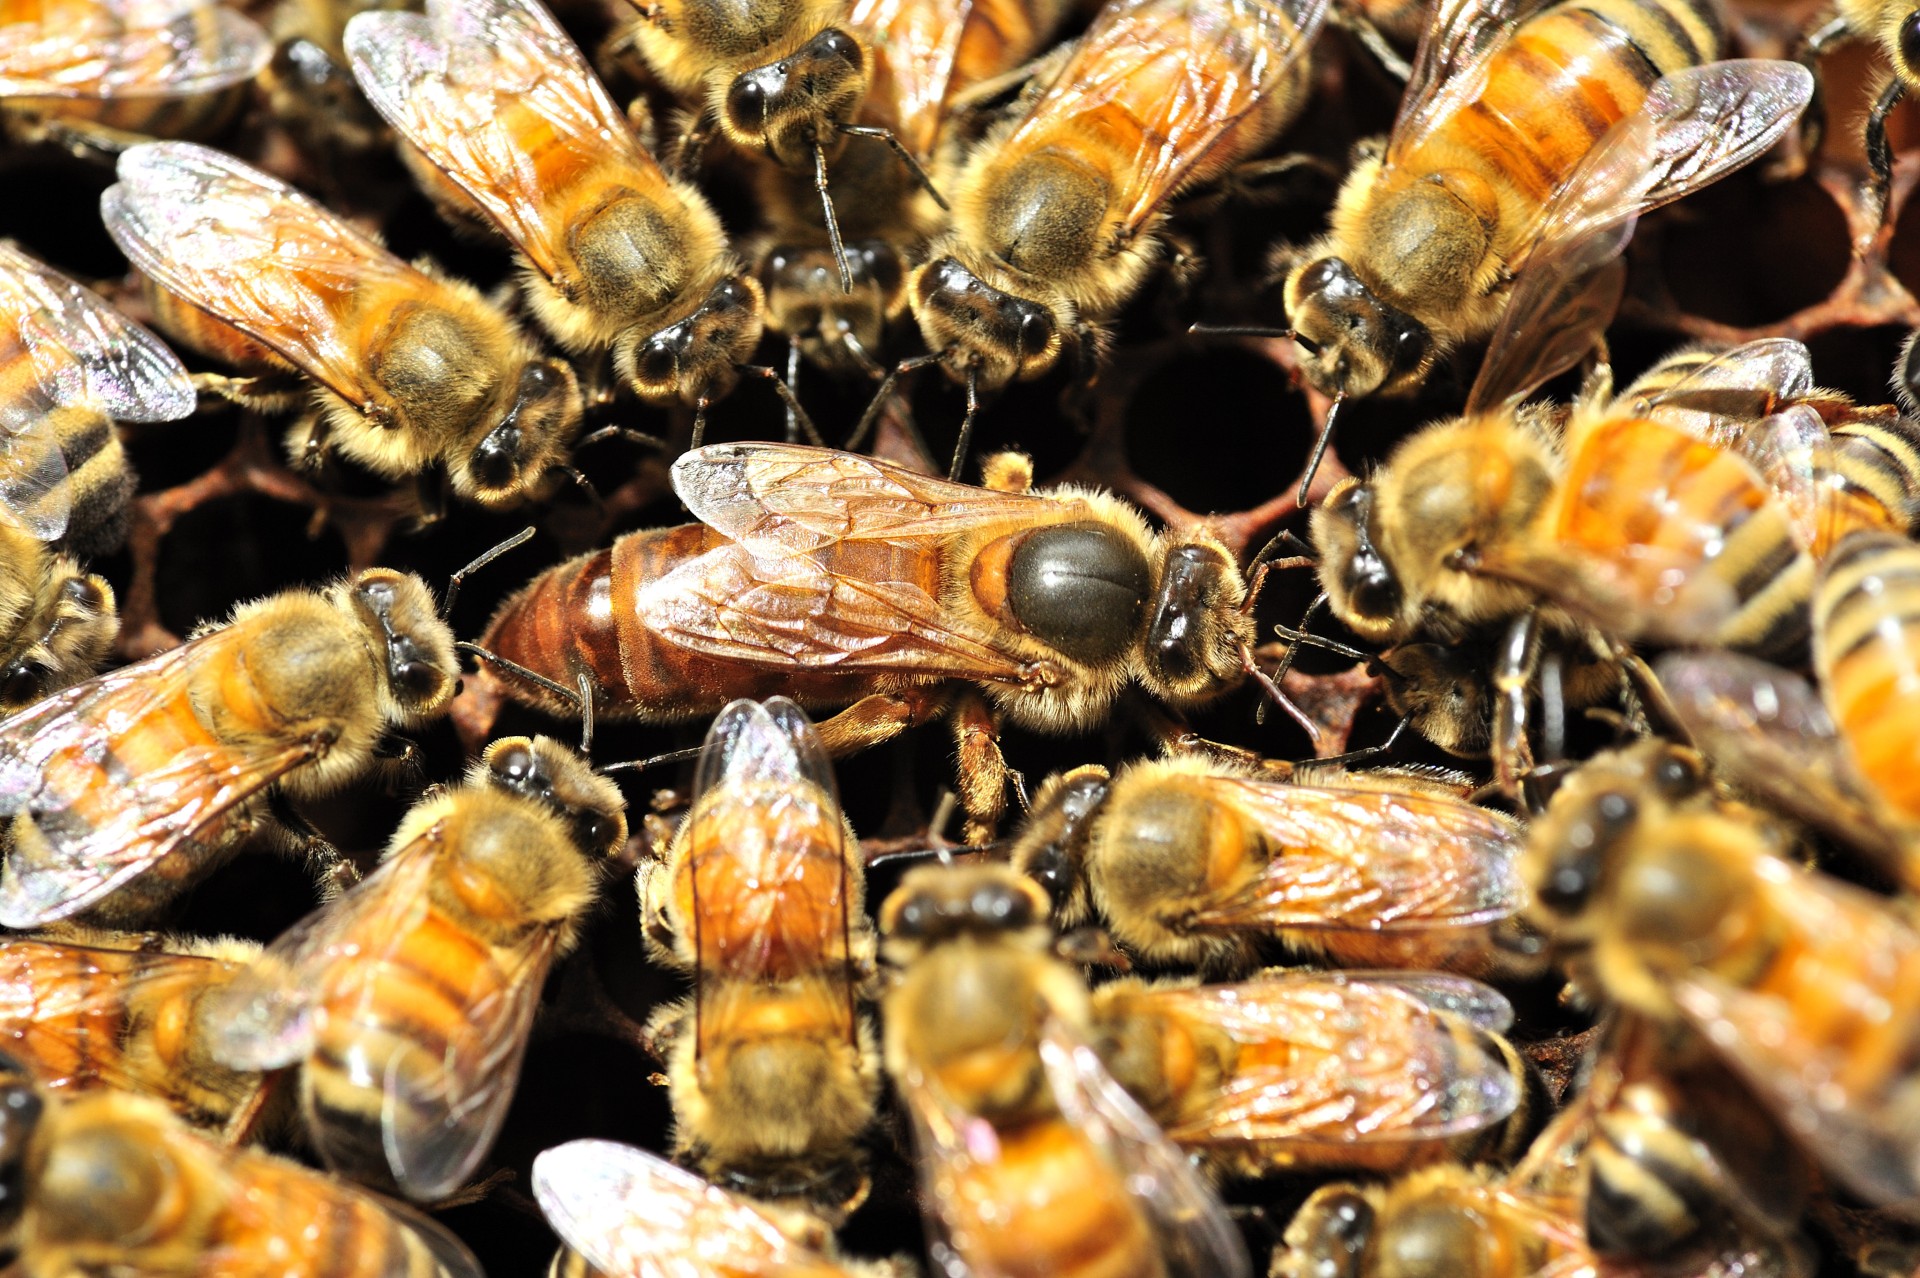 live queen bee with worker bees